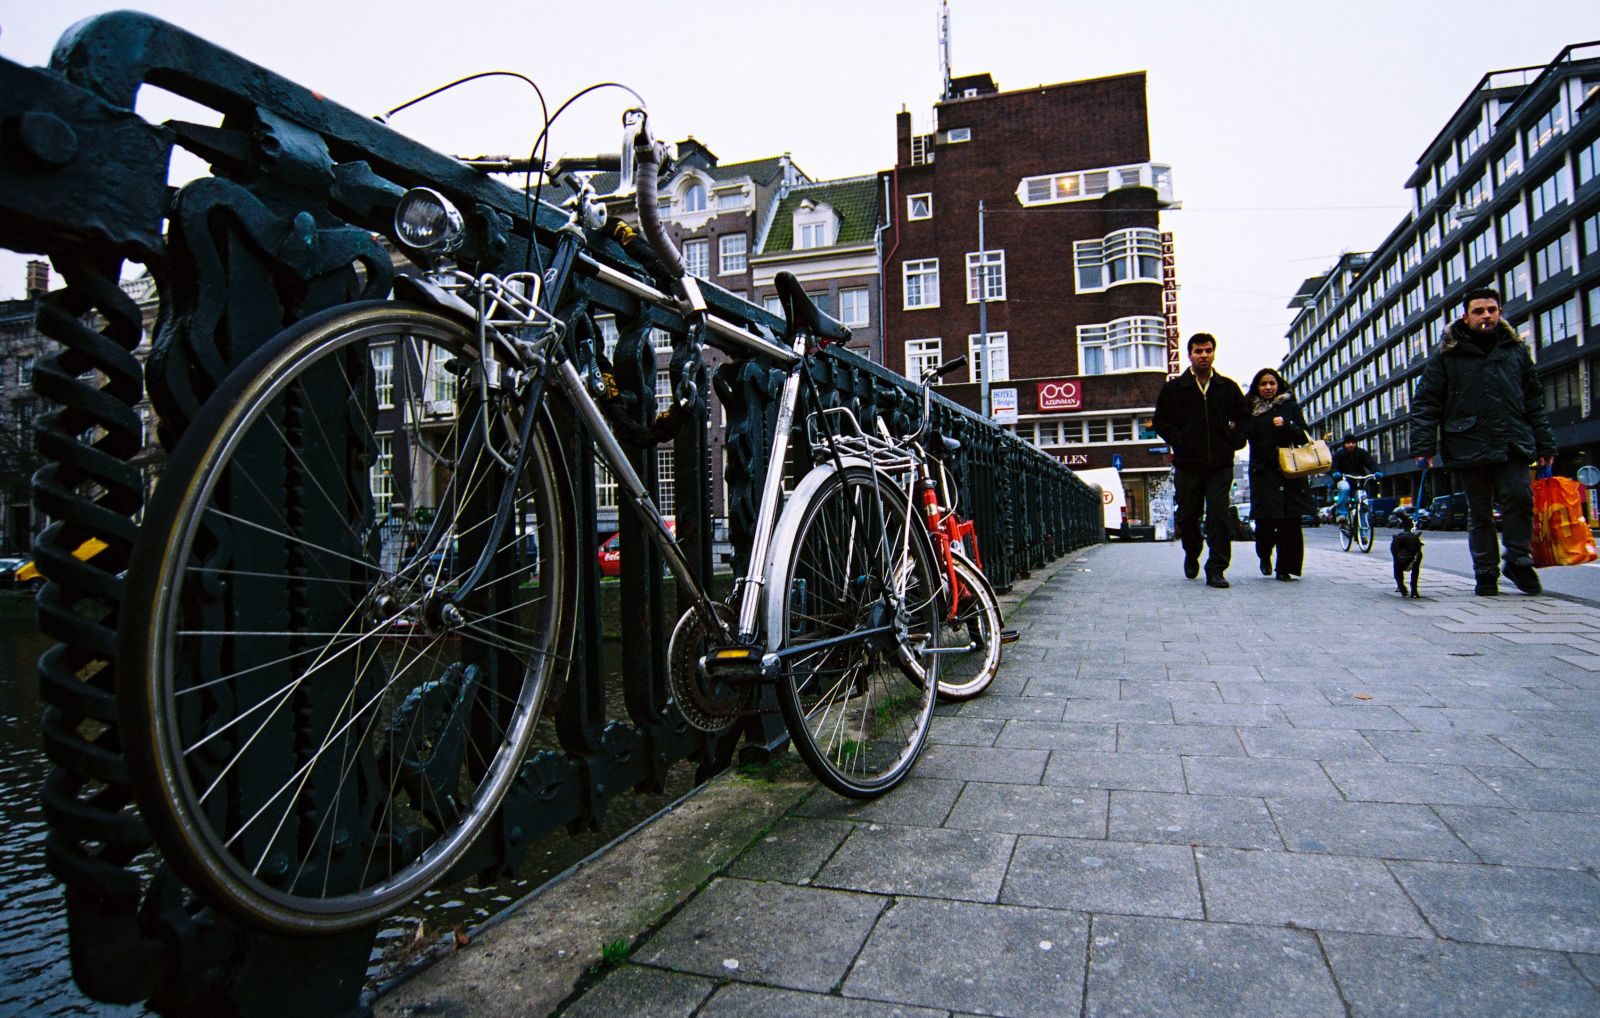 Amsterdam – loanh quanh phố thị